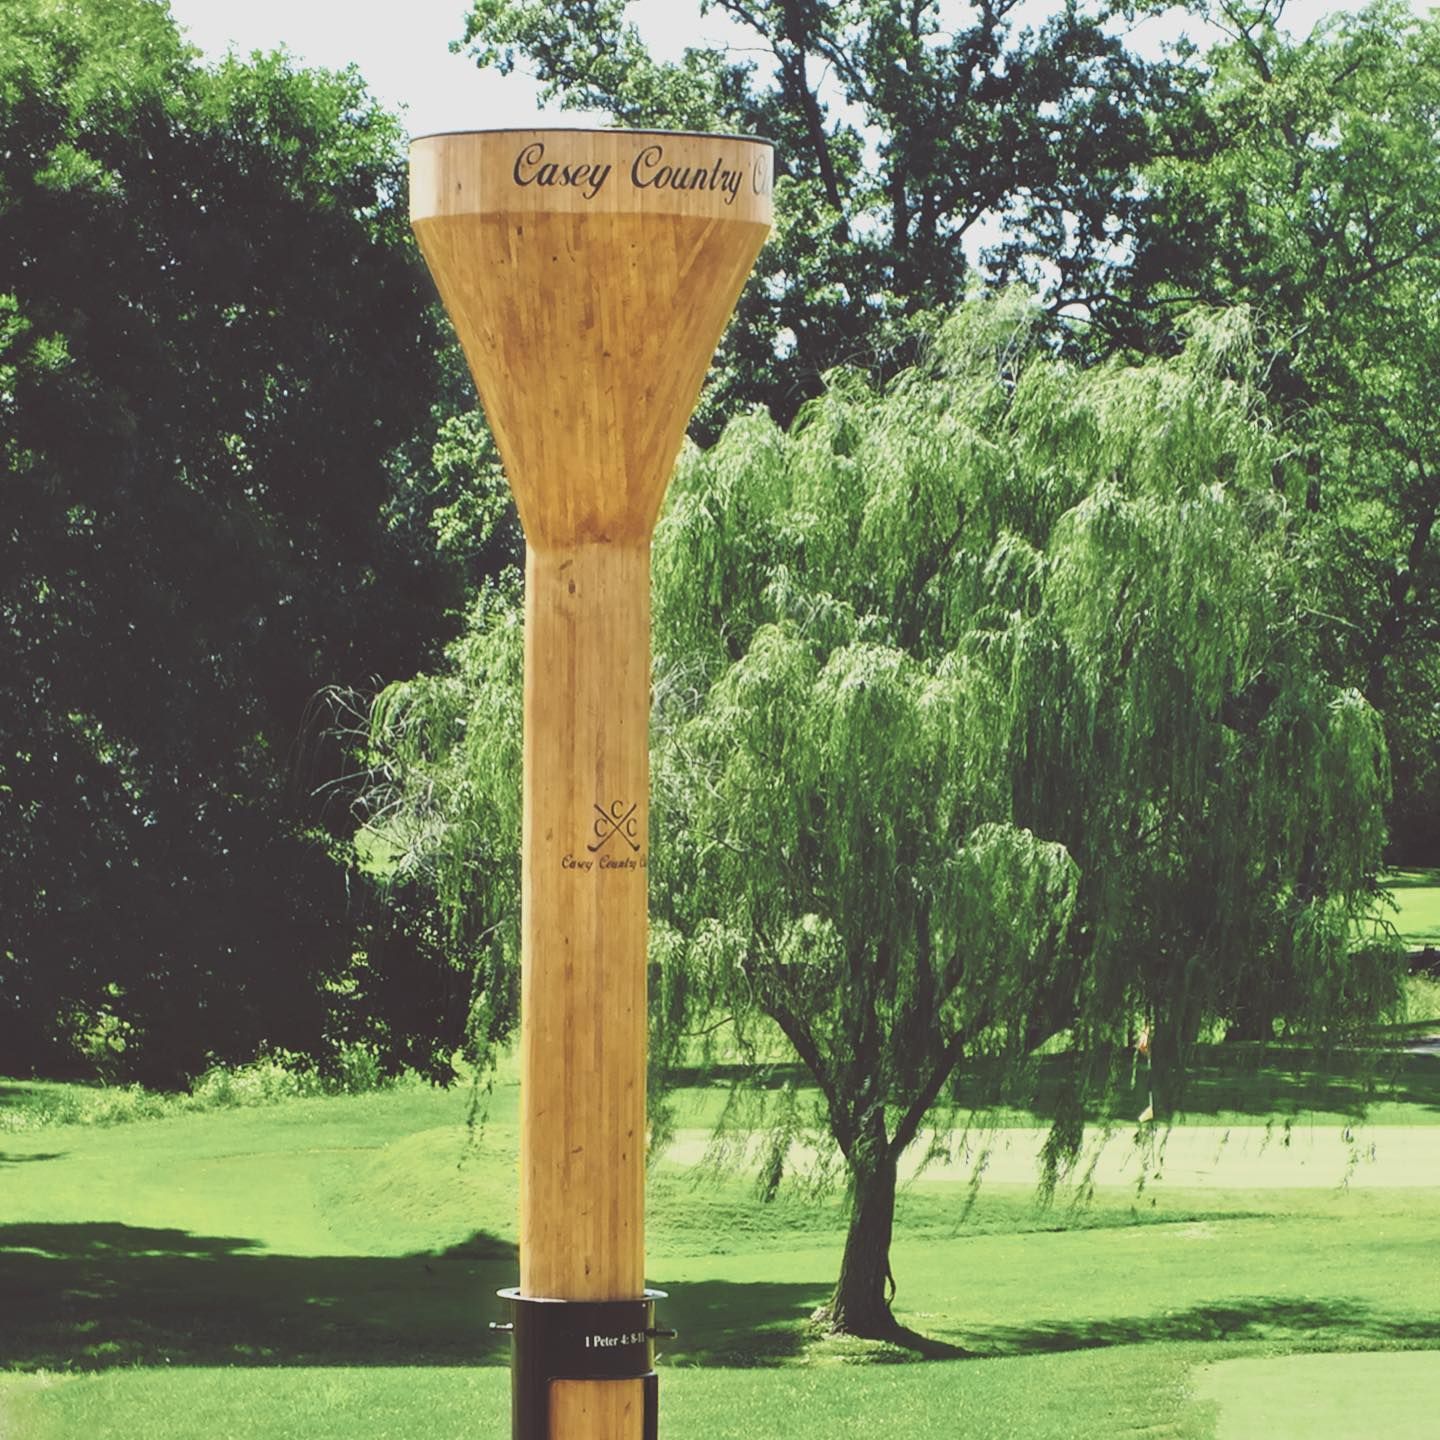 
World's Largest Golf Tee, world record in Casey, Illinois